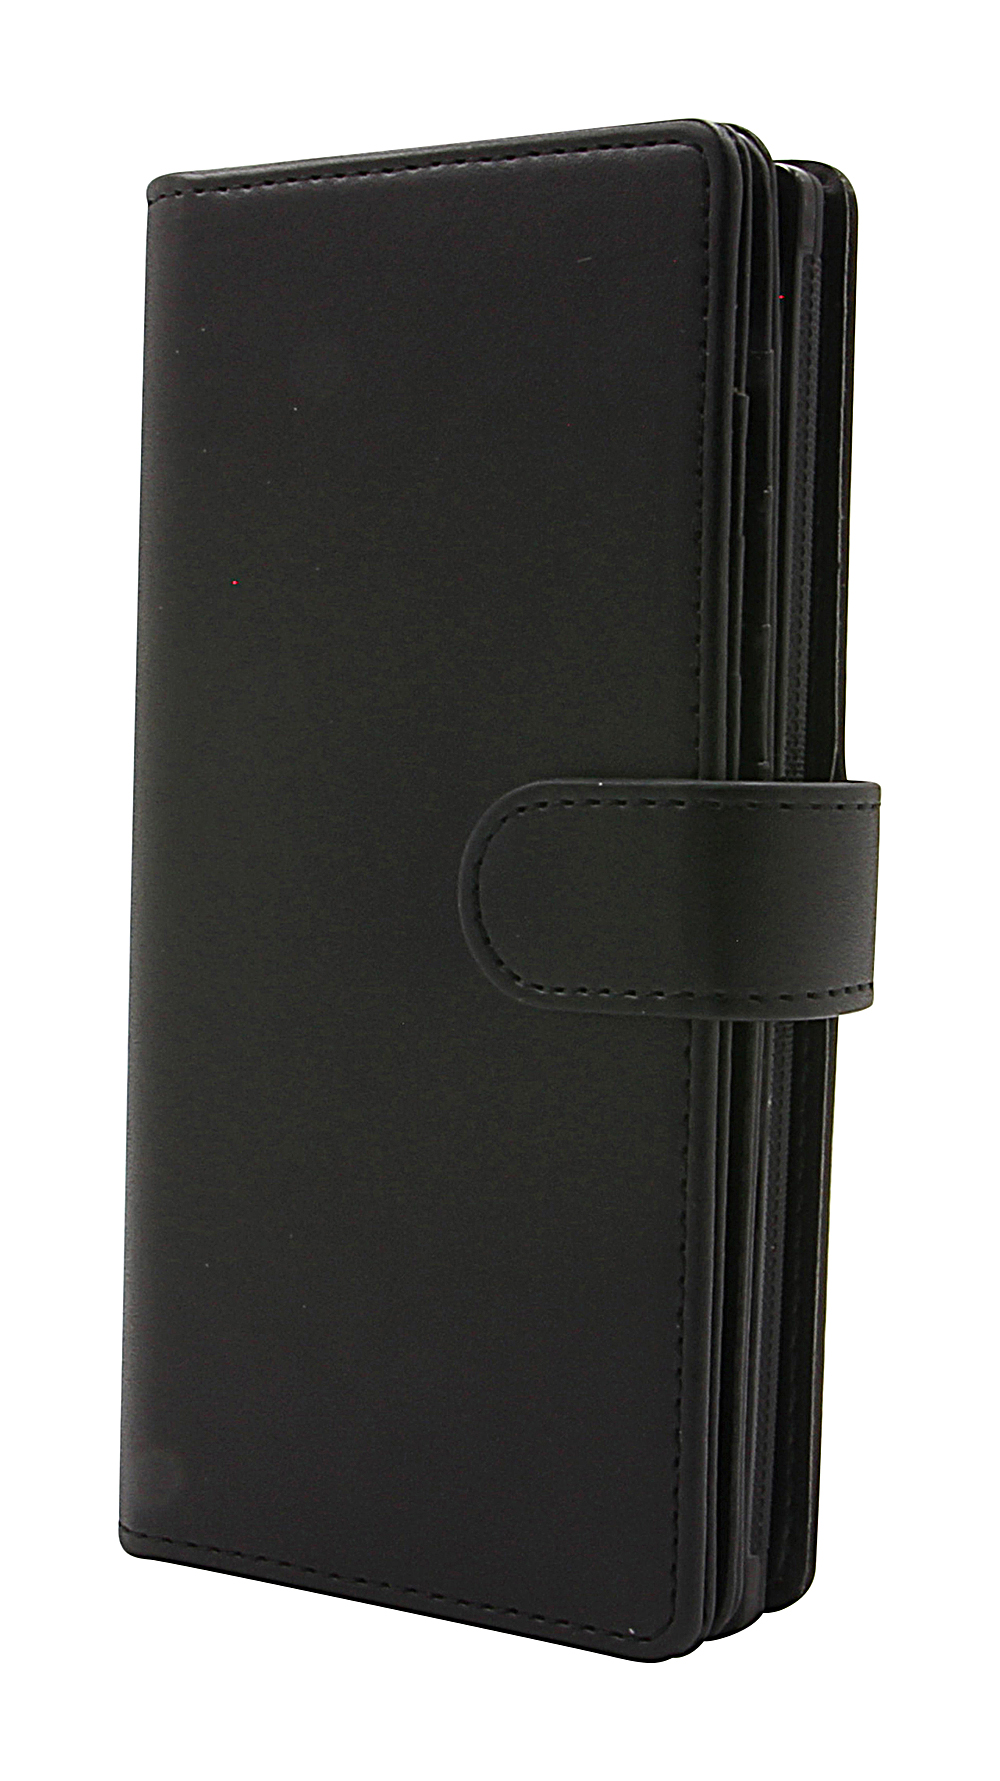 CoverInSkimblocker XL Magnet Fodral Samsung Galaxy Note 10 (N970F/DS)